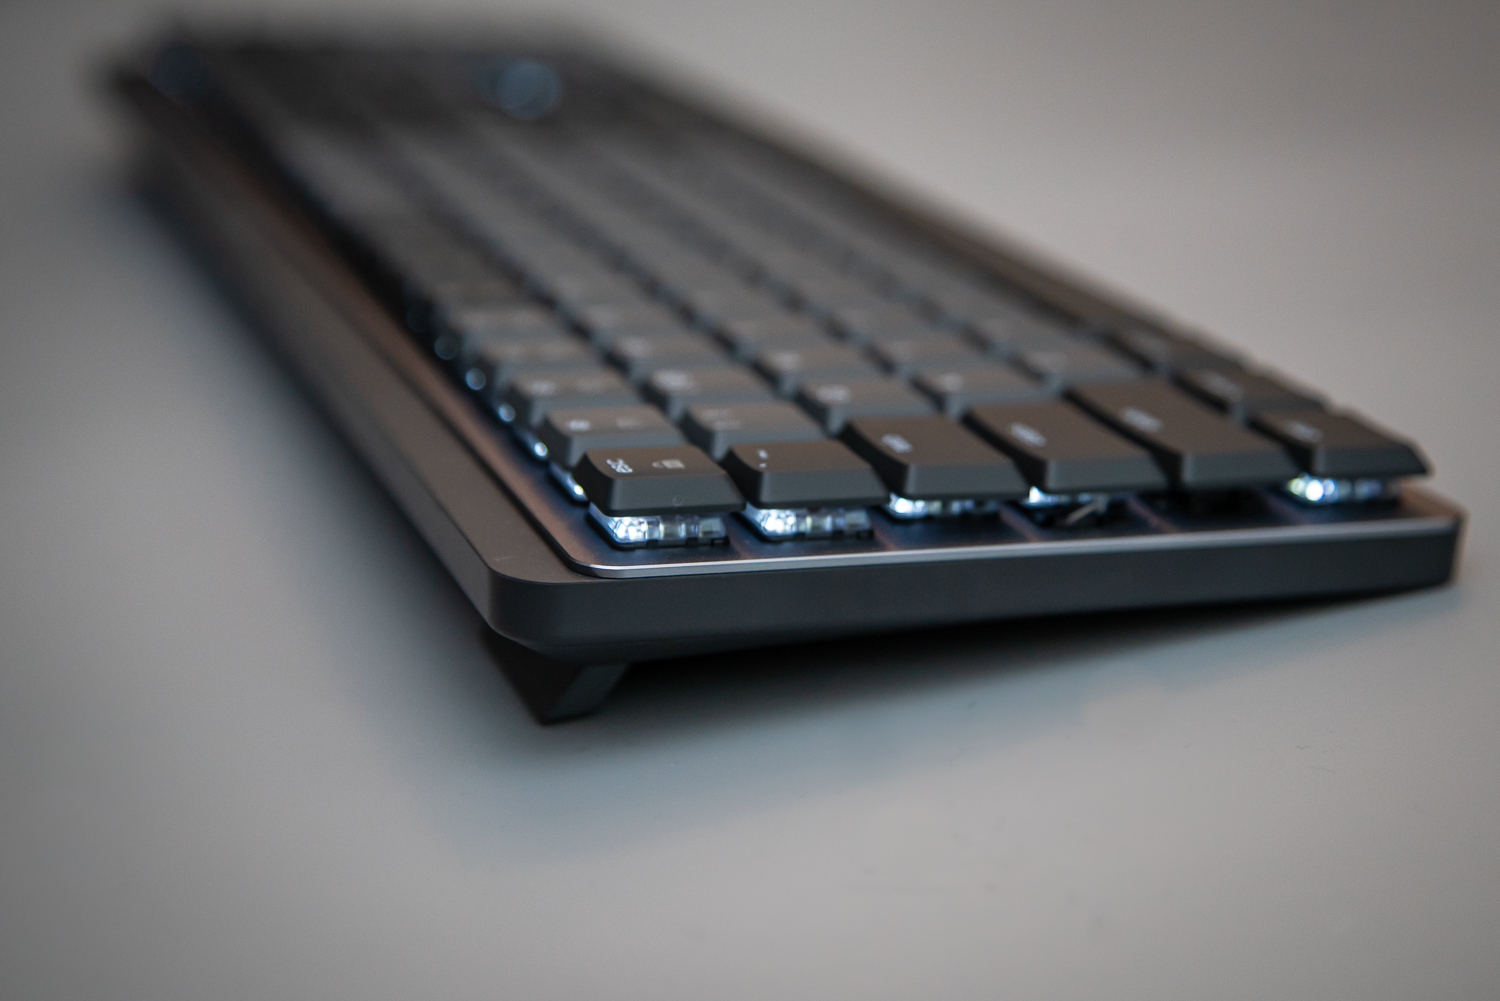 Logitech MX Mechanical Keyboard Review - Reviewed